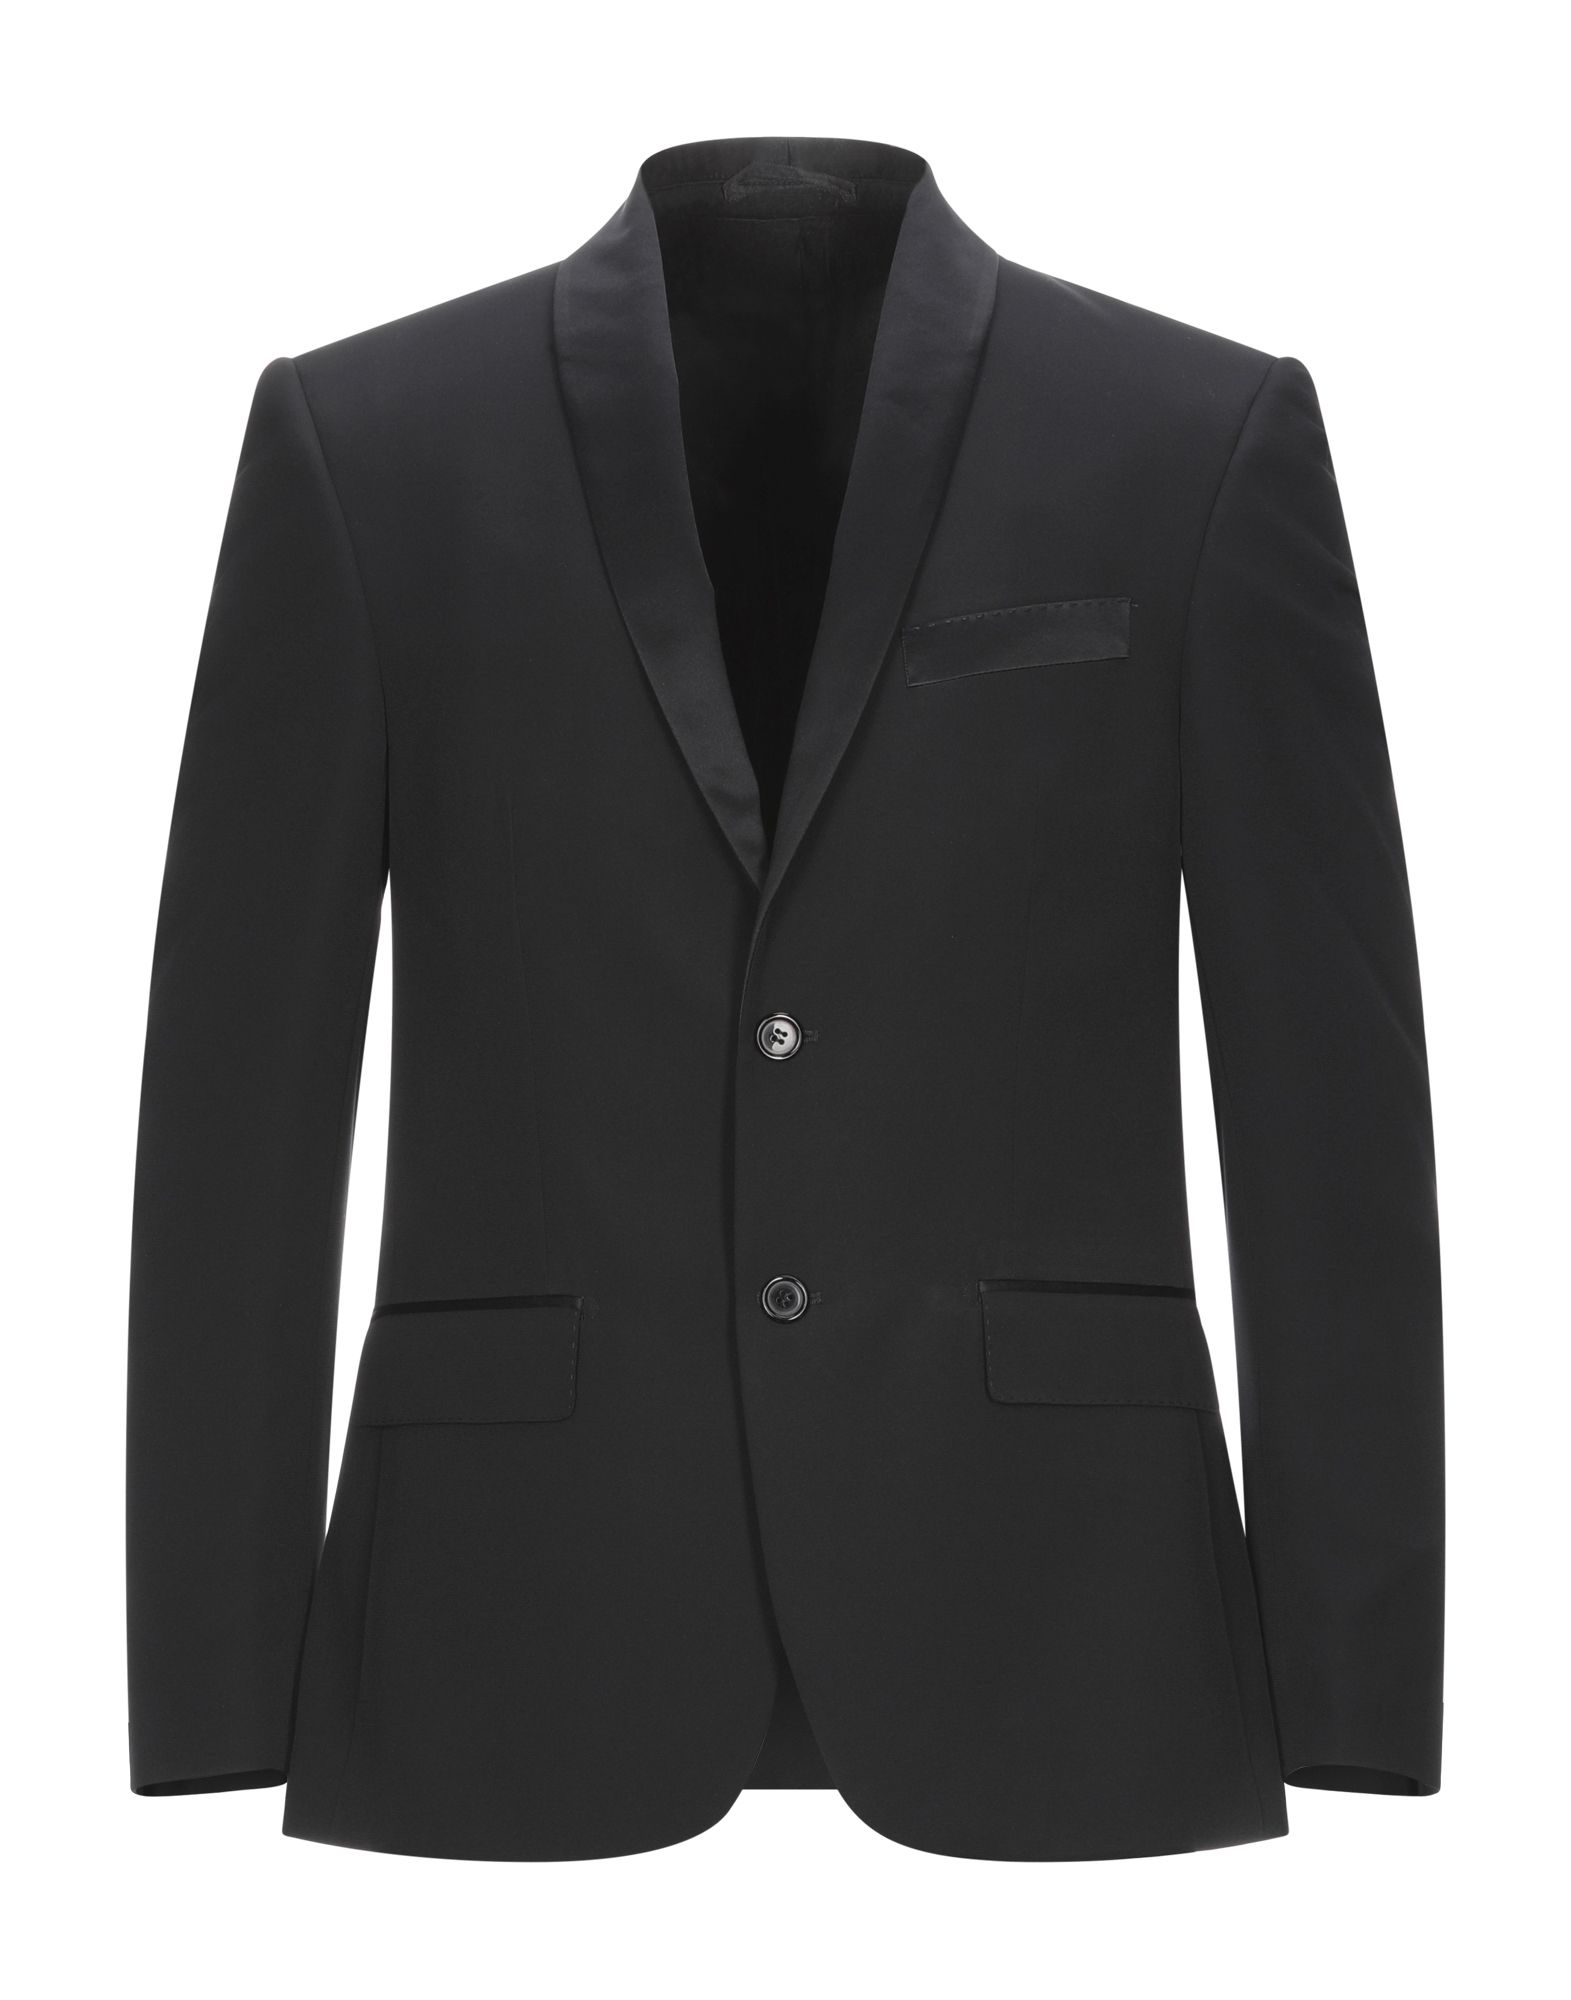 ALV ANDARE LONTANO VIAGGIANDO Suit jackets